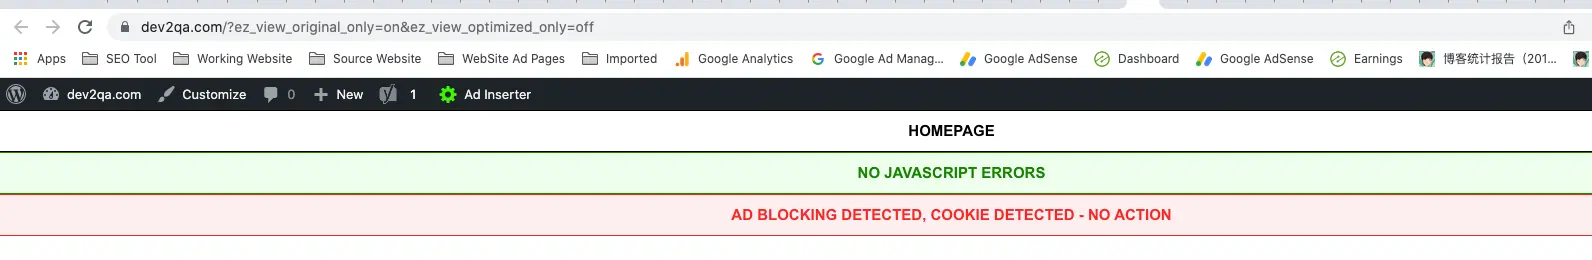 ad inserter top debug banner no javascript error ad blocker detected